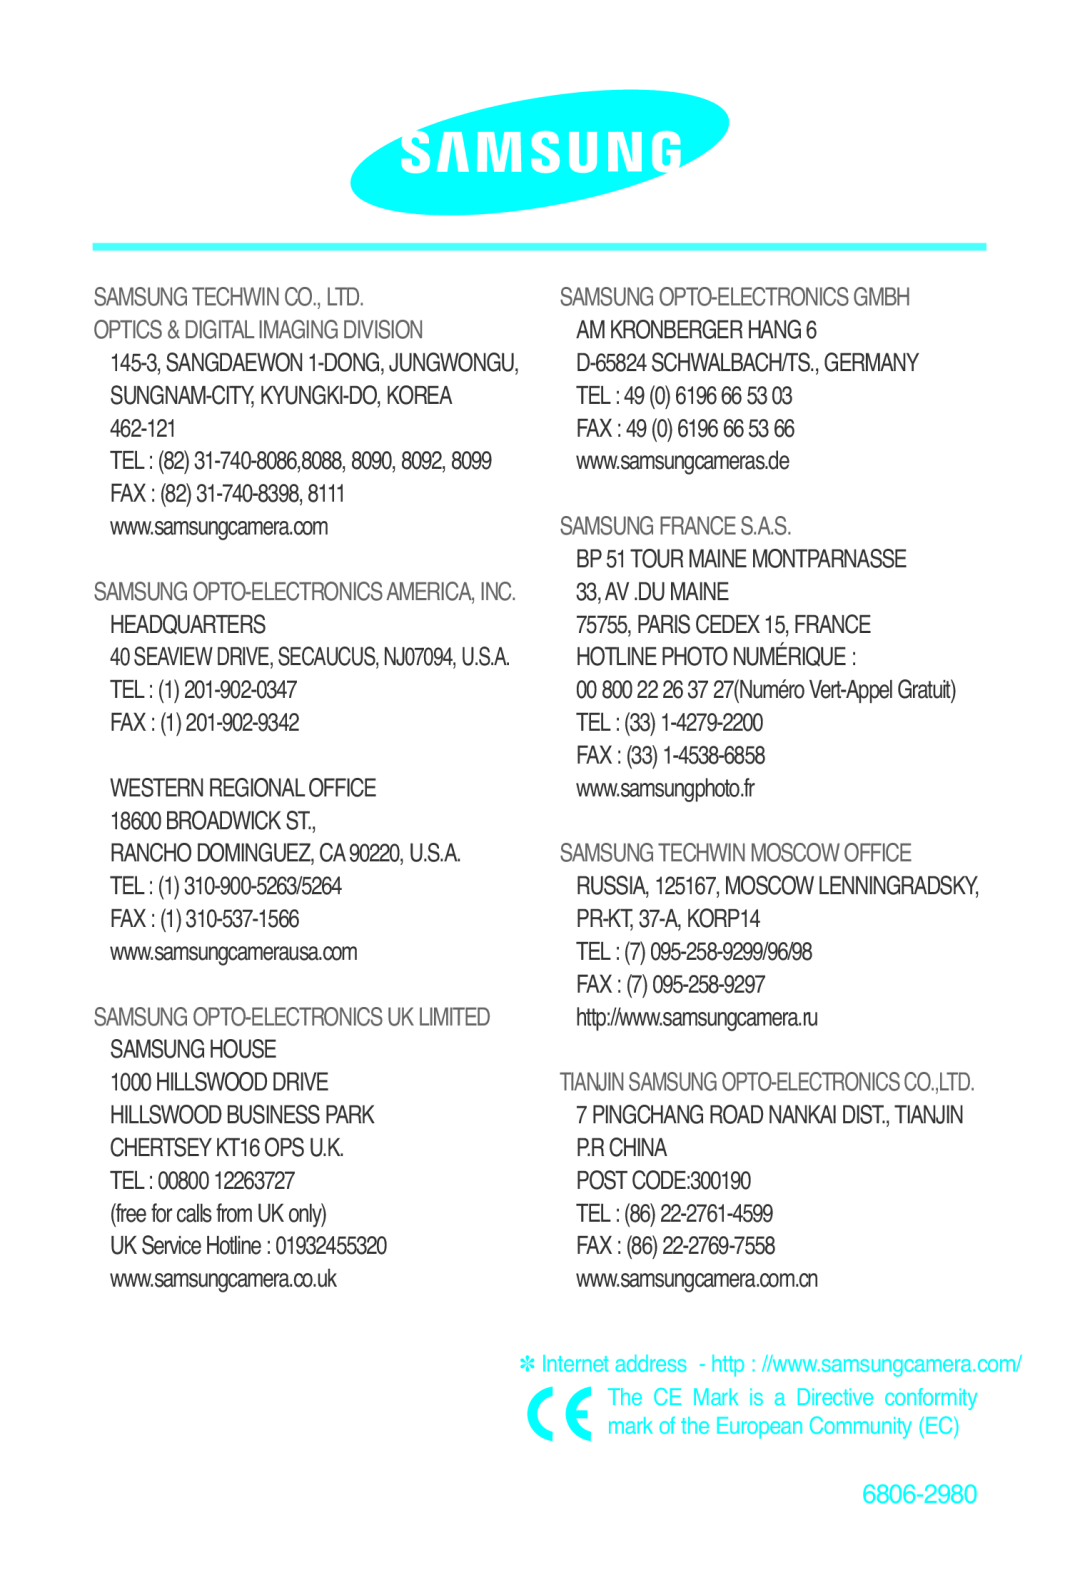 Samsung EC-I50ZZSBA/AS manual 6806-2980, 145-3, SANGDAEWON 1-DONG, JUNGWONGU, SUNGNAM-CITY, KYUNGKI-DO, KOREA, FAX 1 